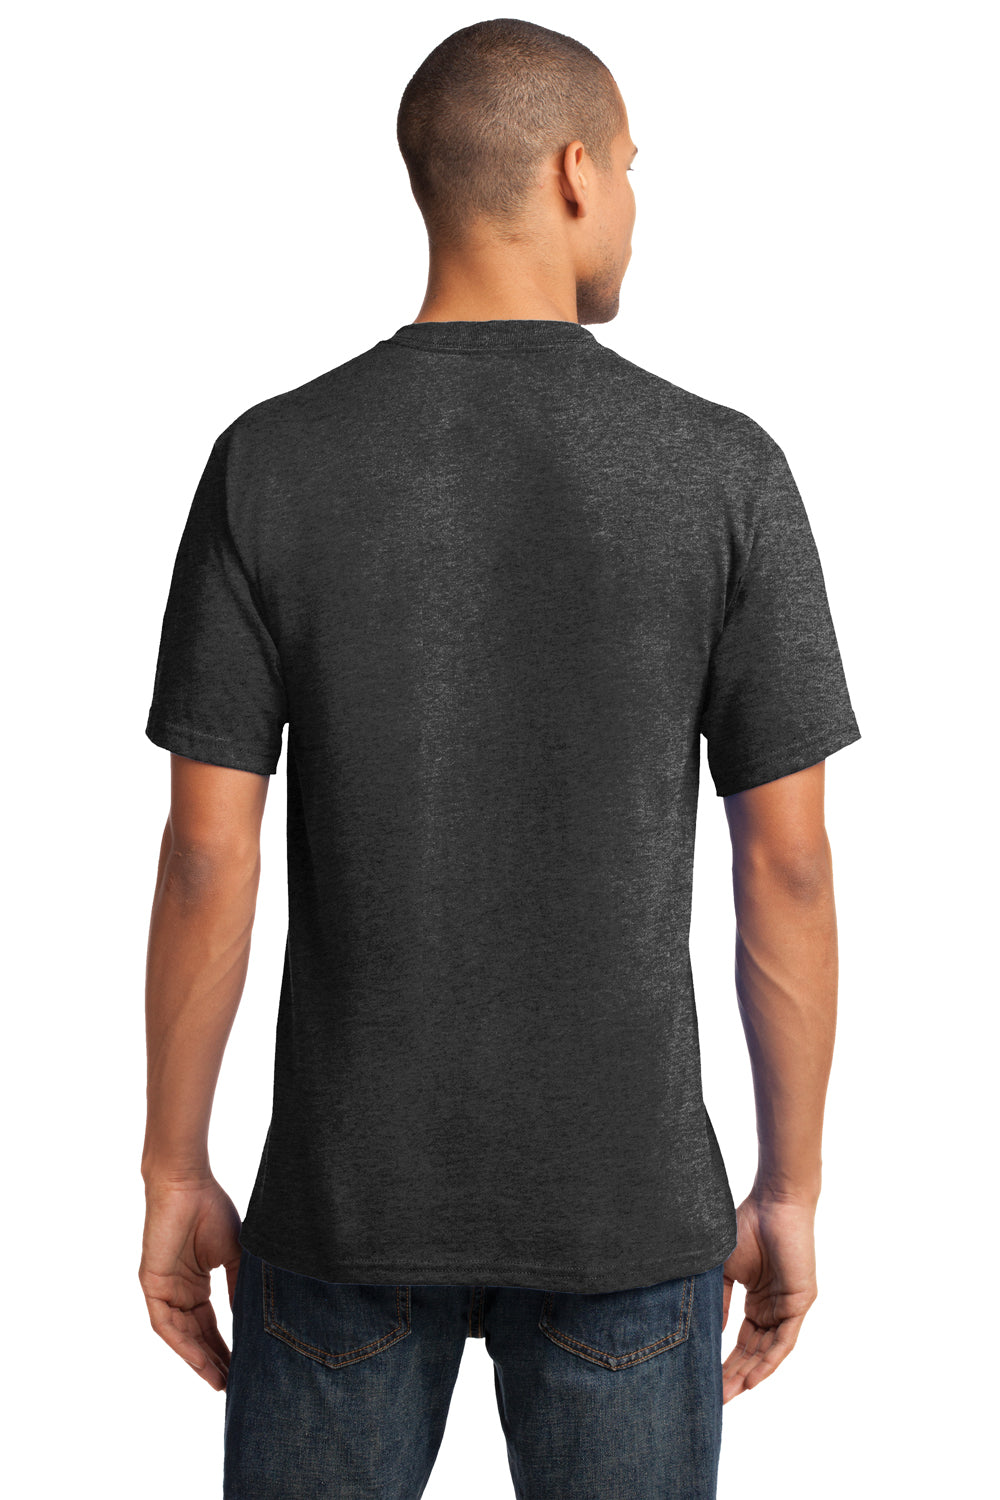 Port & Company PC54V Mens Core Short Sleeve V-Neck T-Shirt Heather Dark Grey Back